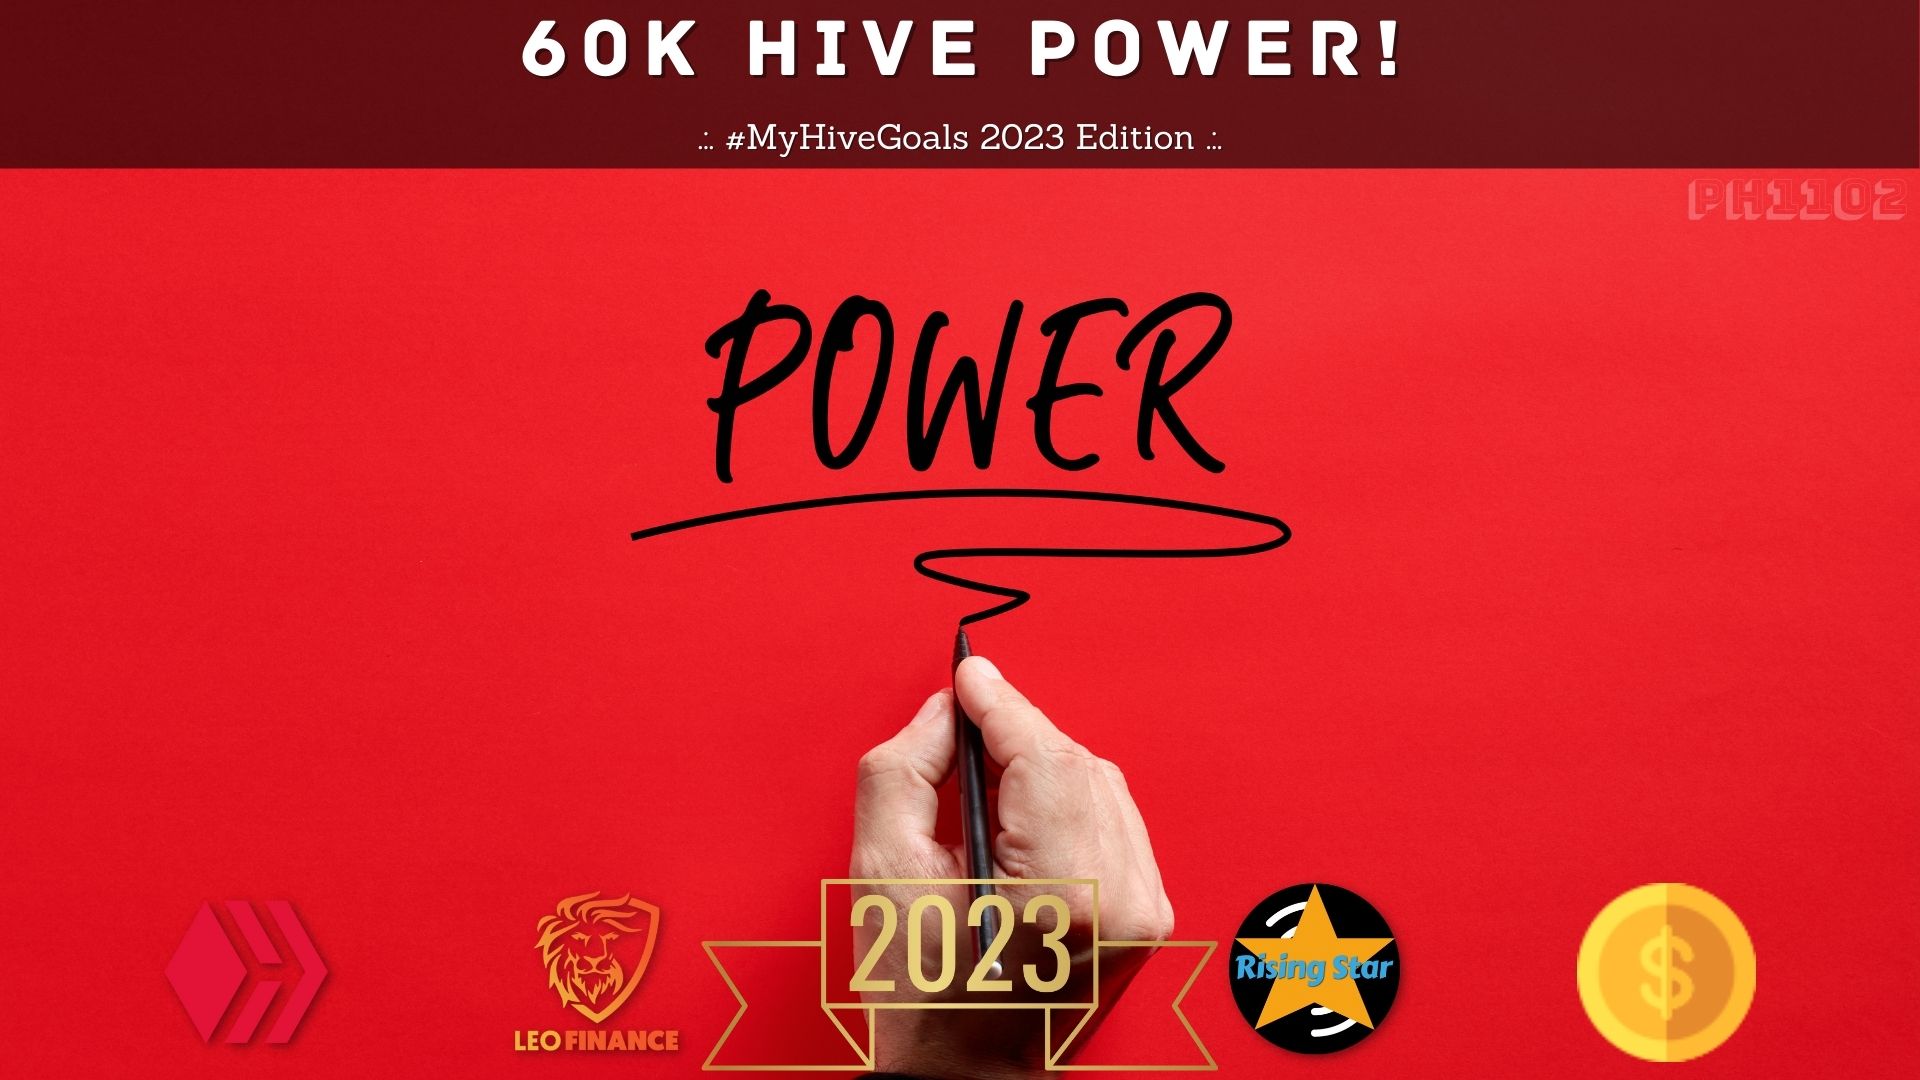 @ph1102/60k-hive-power-myhivegoals-2023